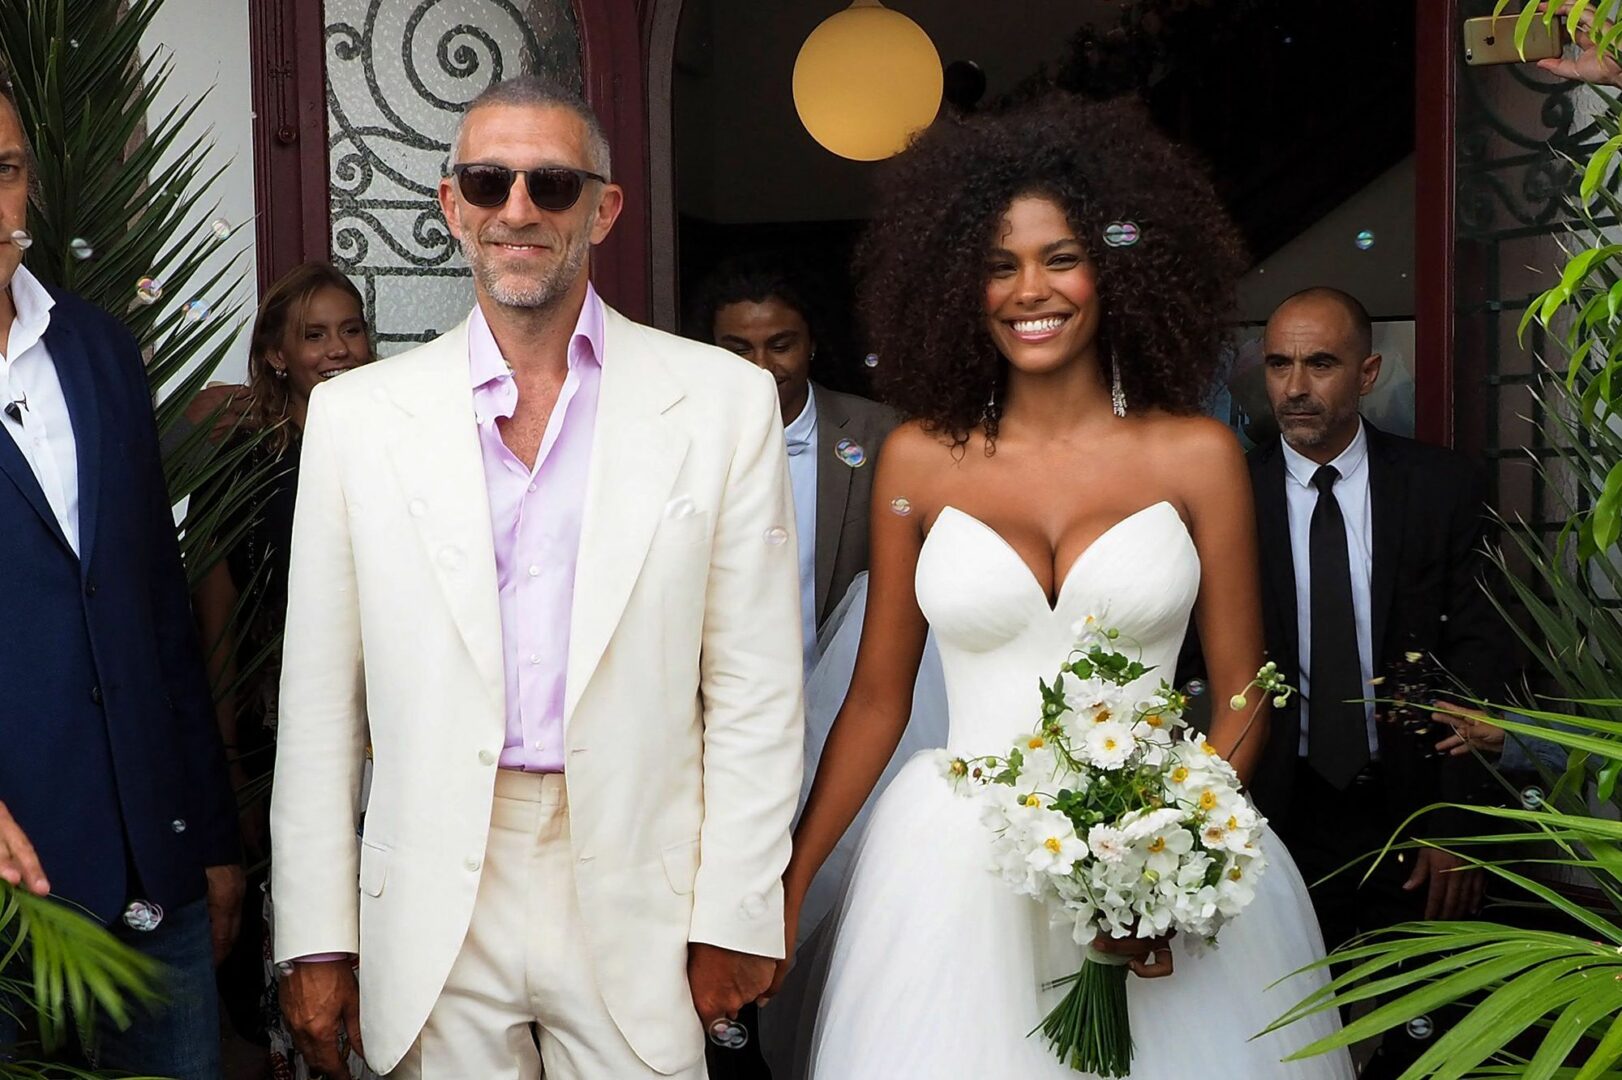  Vincent Cassel et Tina Kunakey se marient à Bidart @ Patrick Bernard-Guillaume Collet/Bestimage